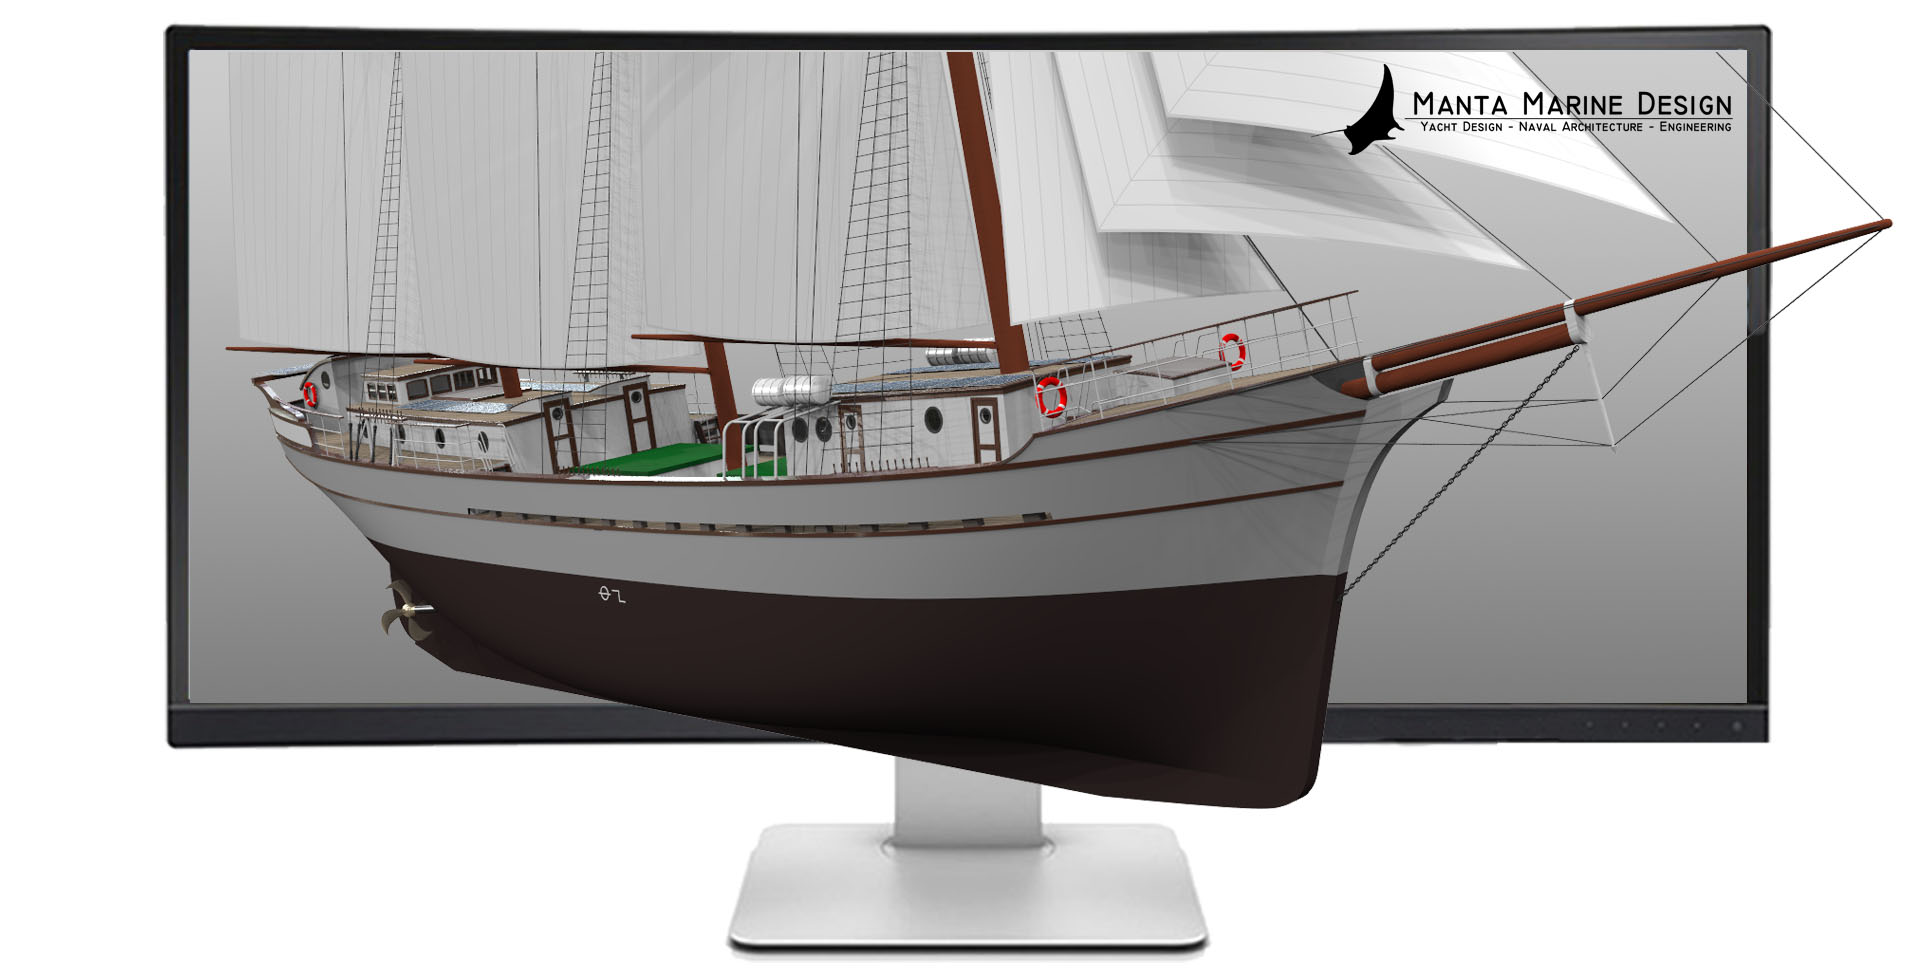 Manta Marine Design, Naval Architecture, Engineering, Tallship and Sailing Cargo Vessels